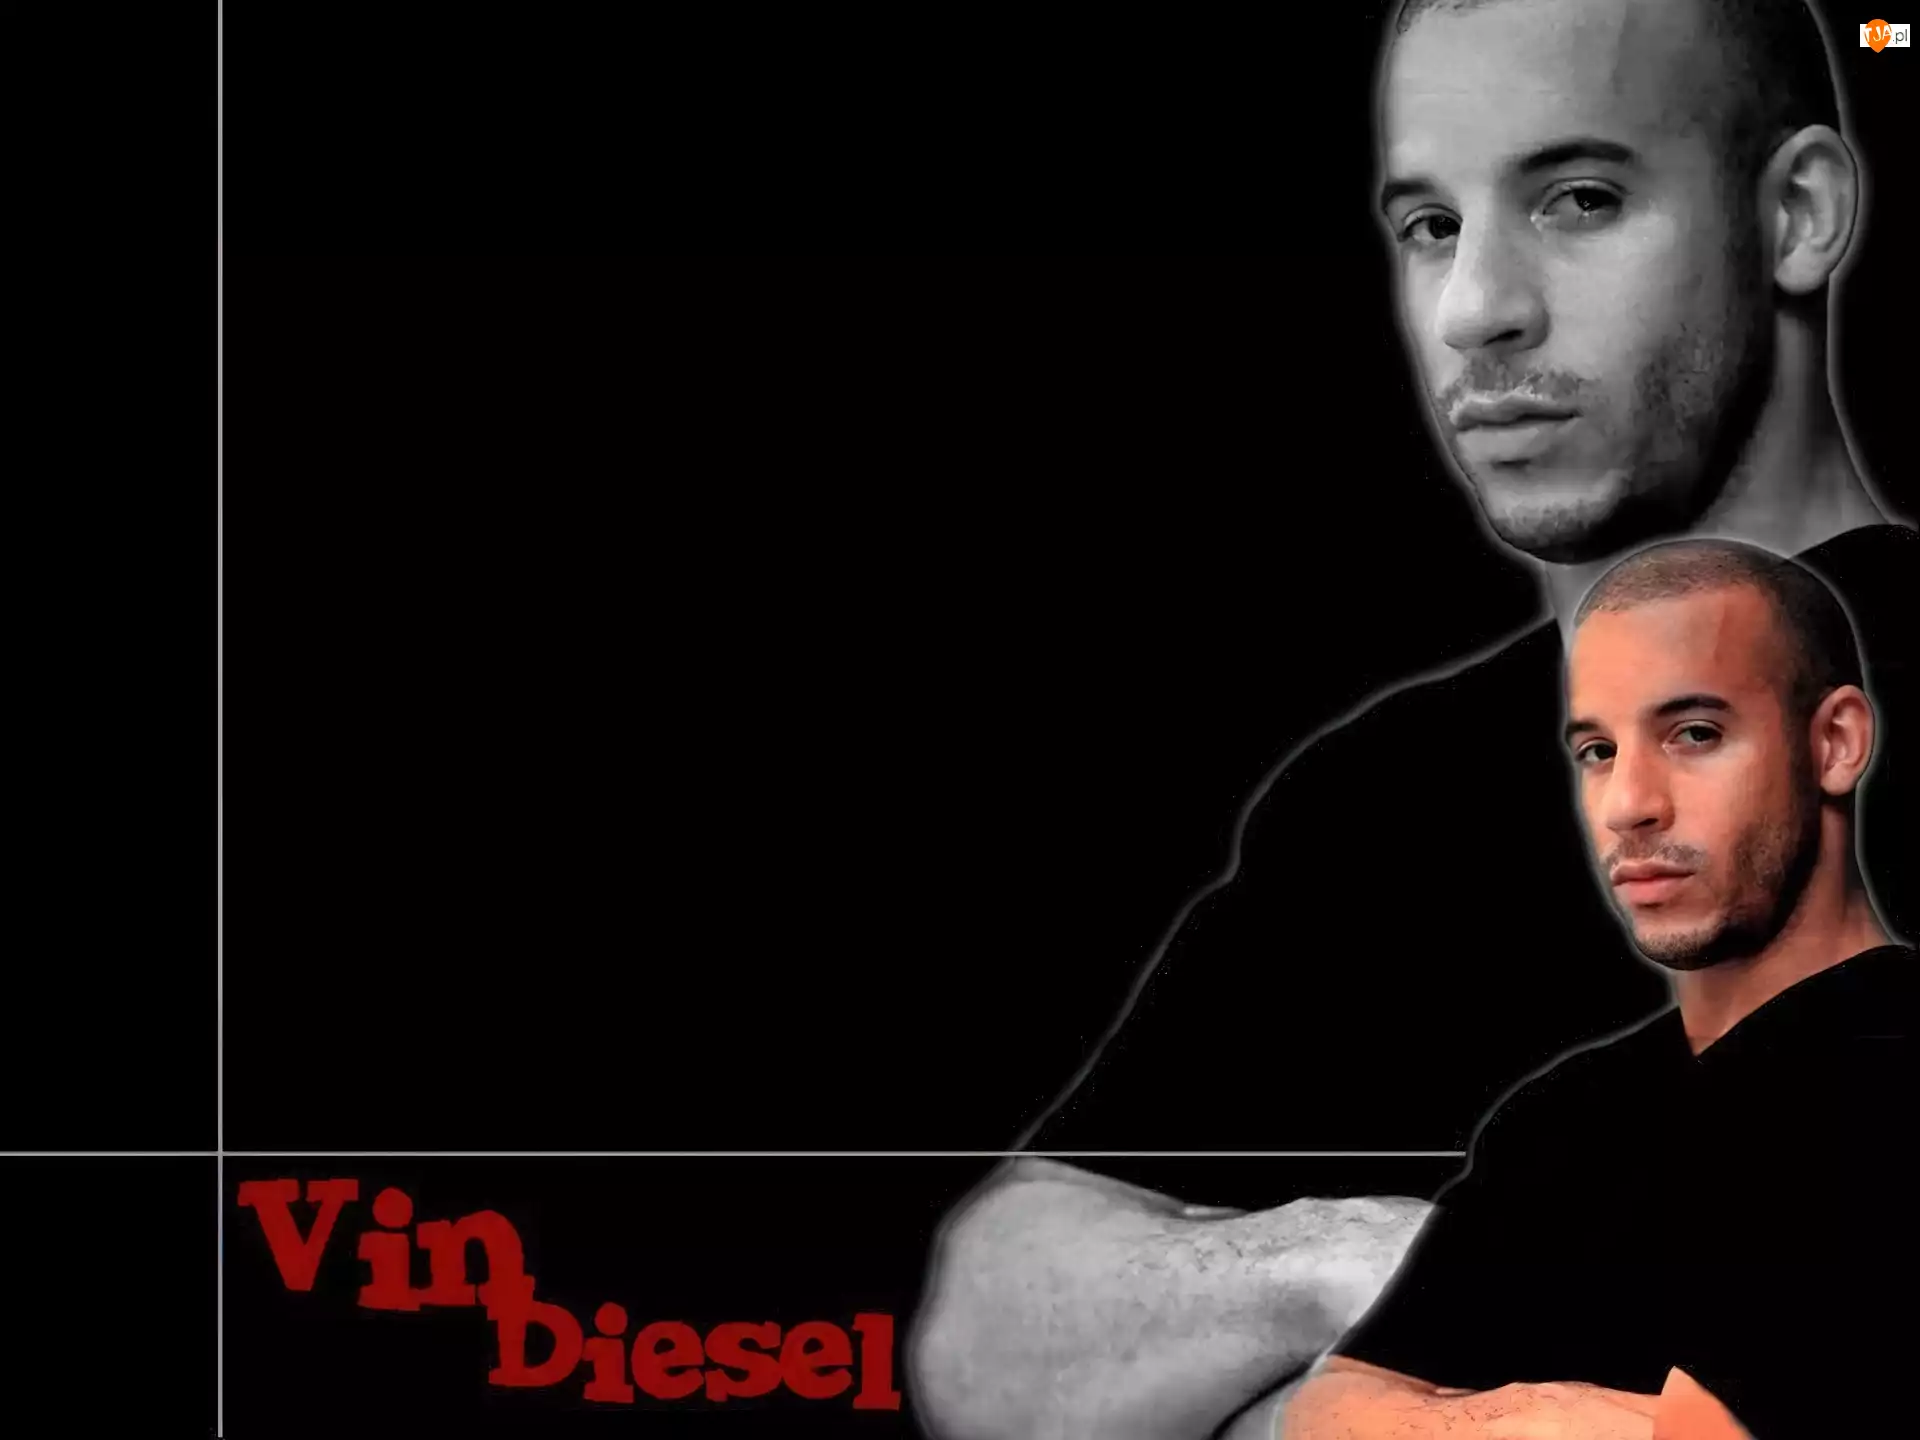 czarna koszulka, Vin Diesel